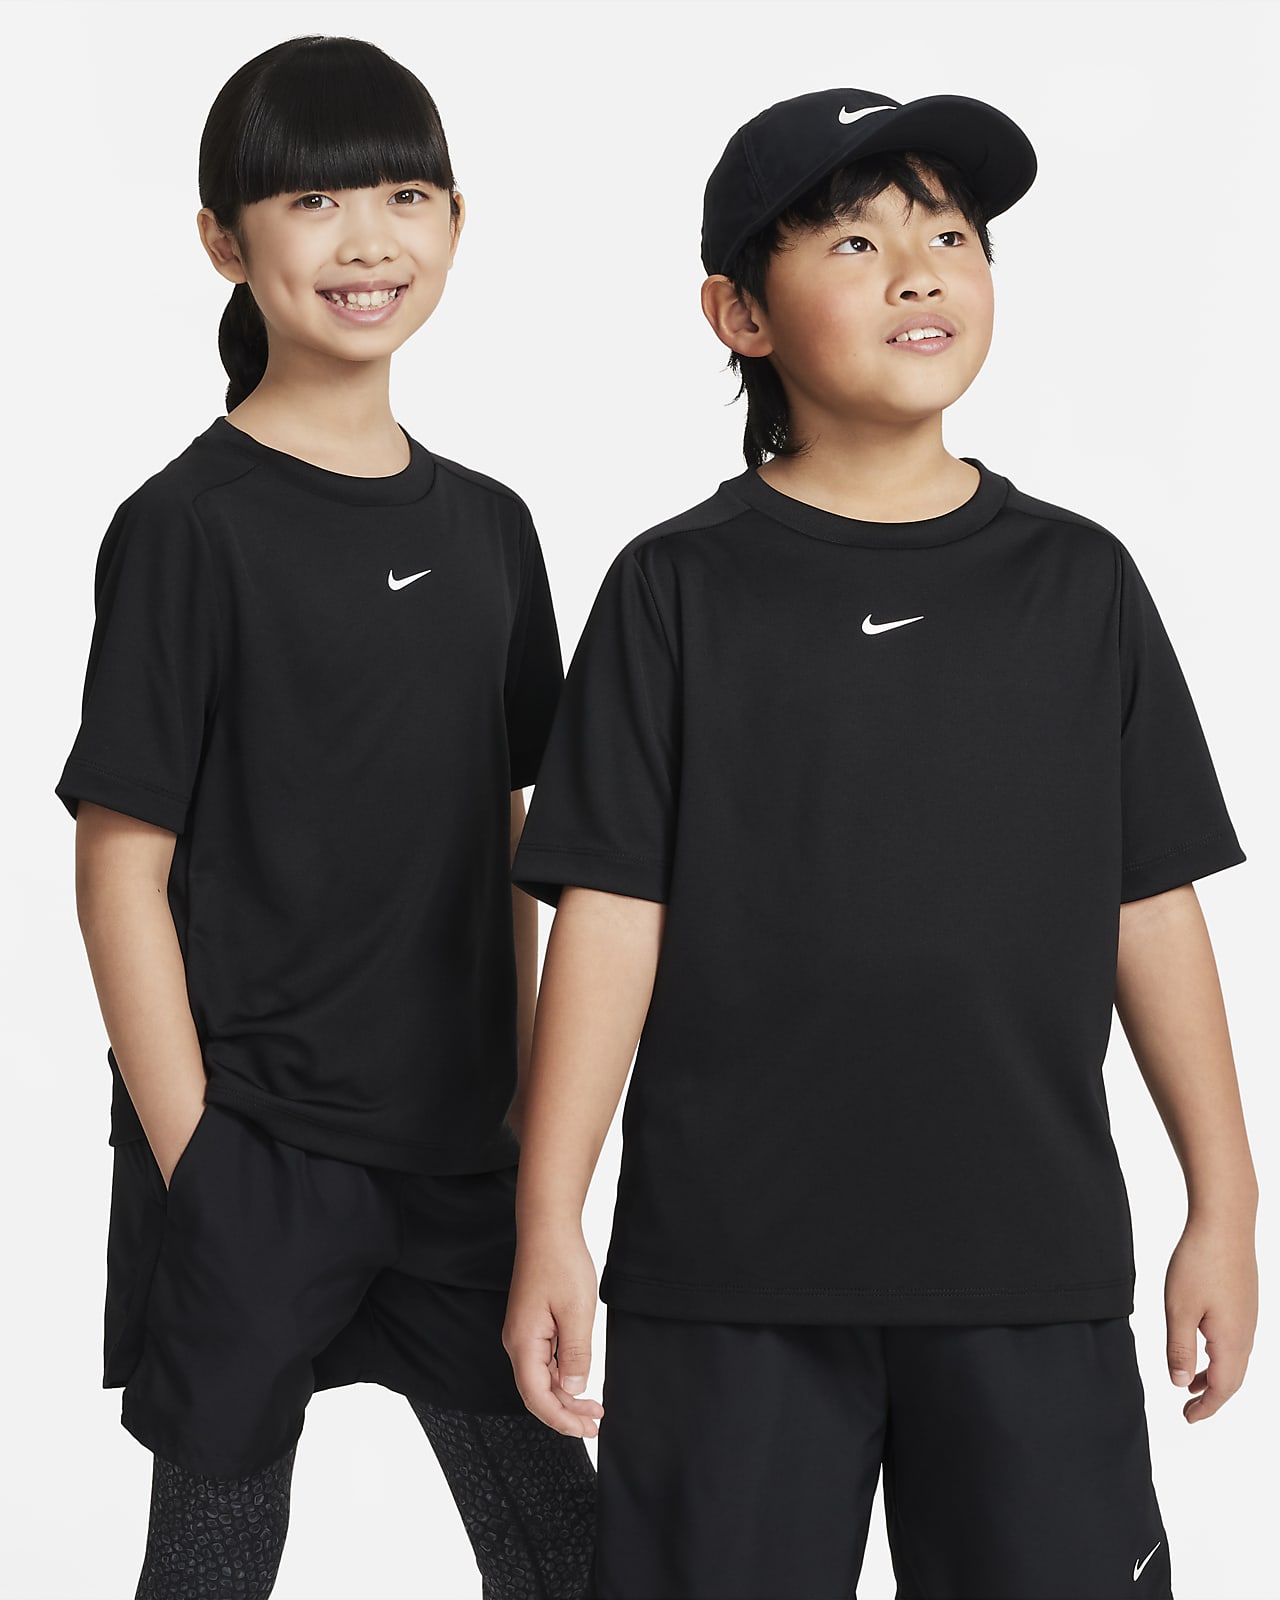 Nike Multi Dri-FIT trainingstop voor jongens